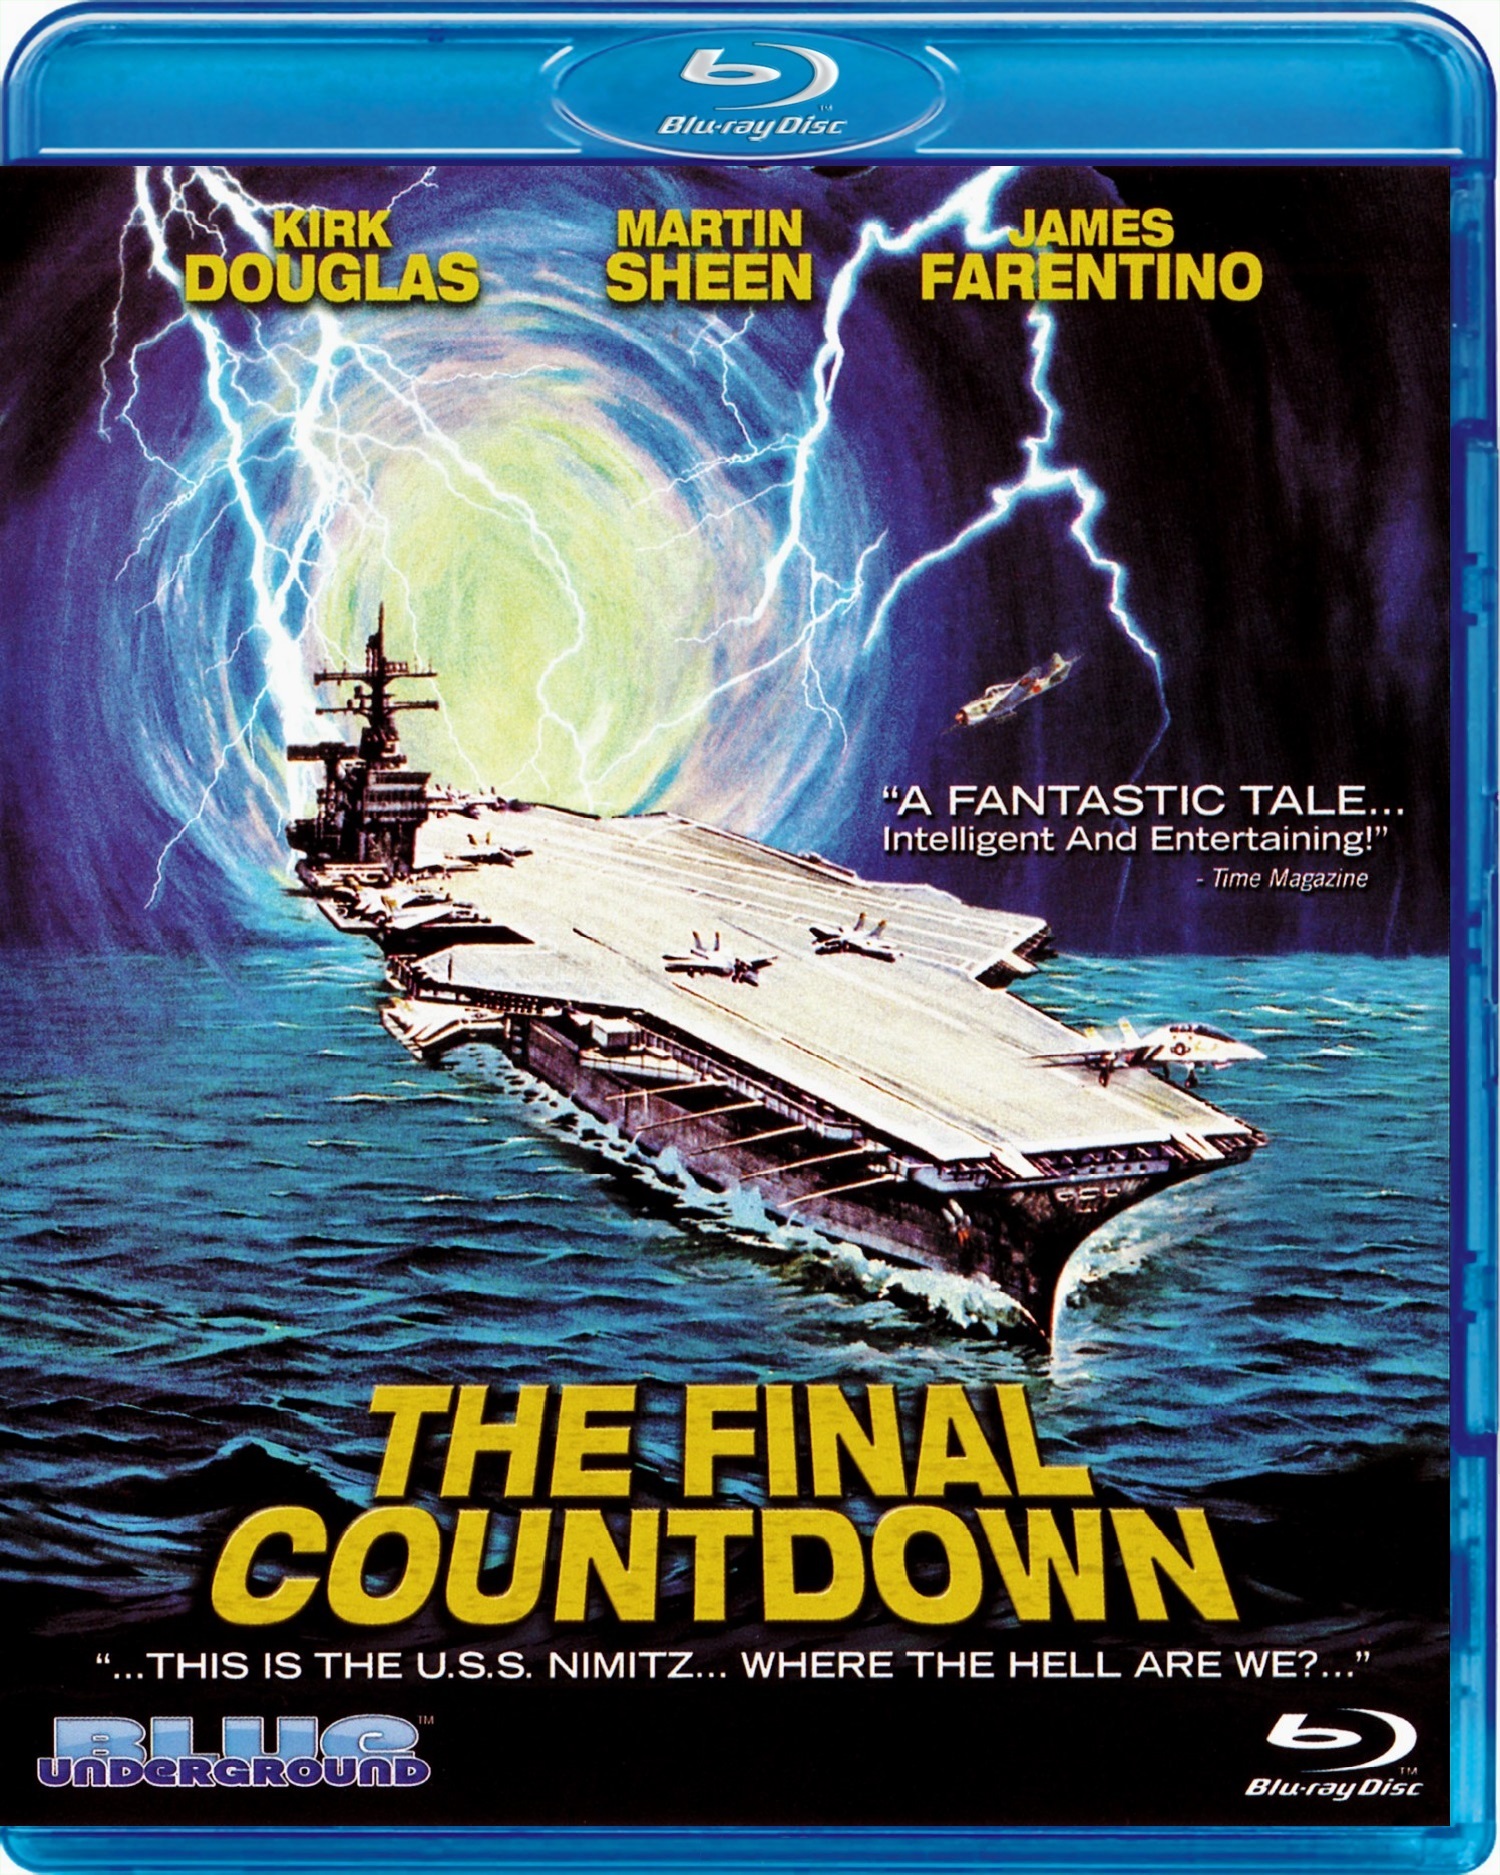 [碧血长天].The.Final.Countdown.1980.USA.BluRay.1080p.VC-1.TrueHD.7.1-HDHome     34.18G-1.jpg